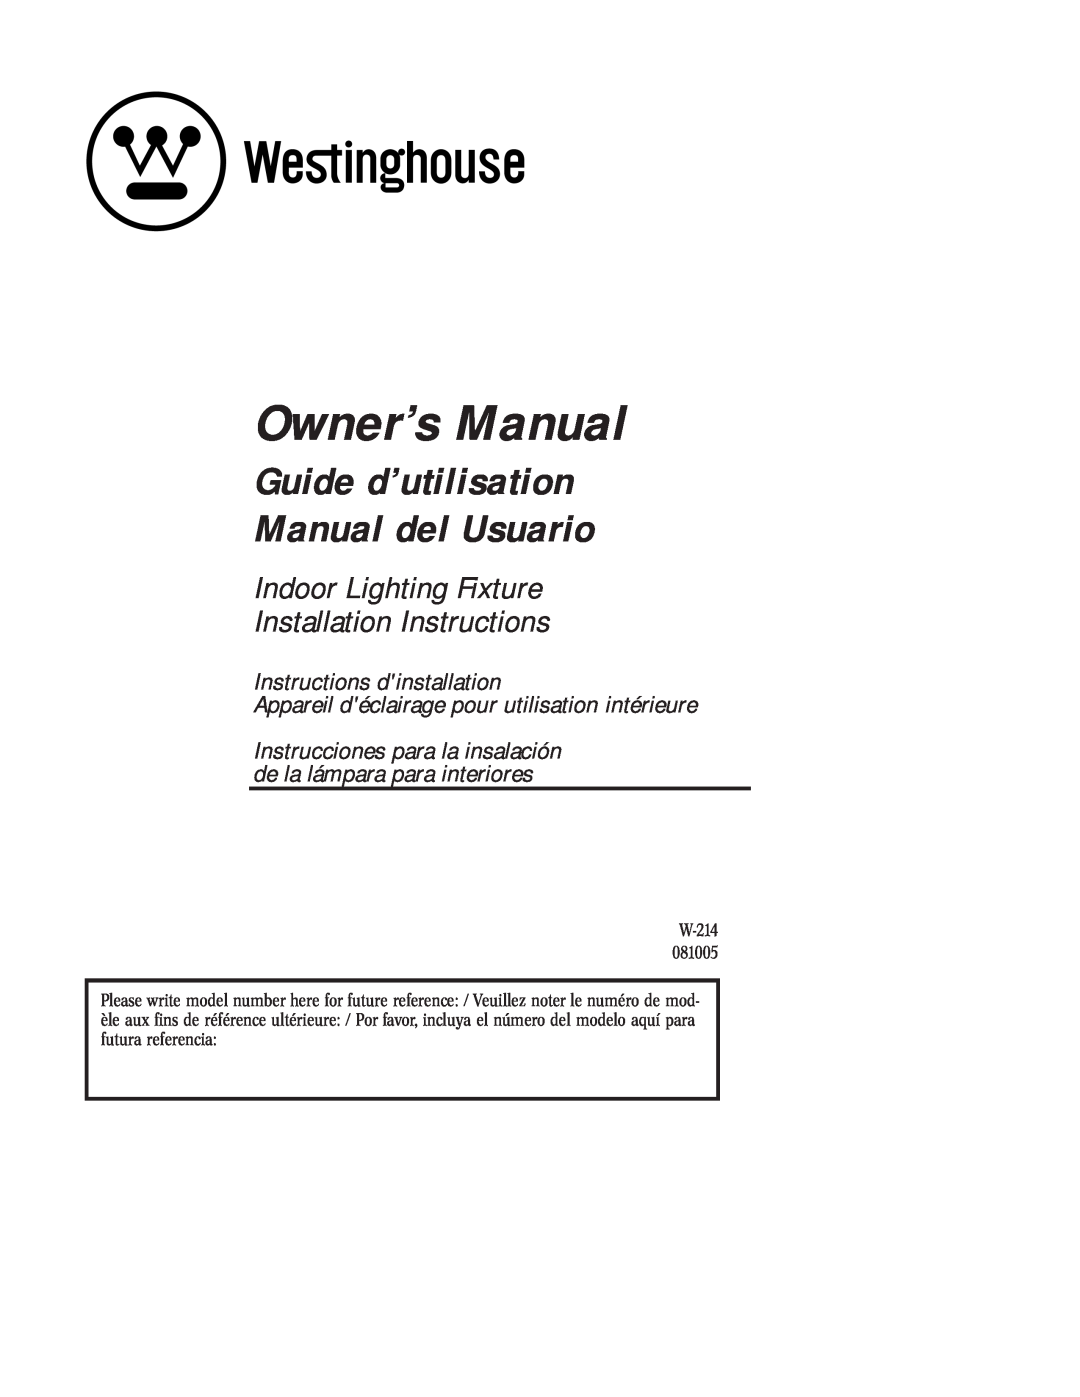 Westinghouse 81005 owner manual Guide d’utilisation Manual del Usuario, Indoor Lighting Fixture Installation Instructions 